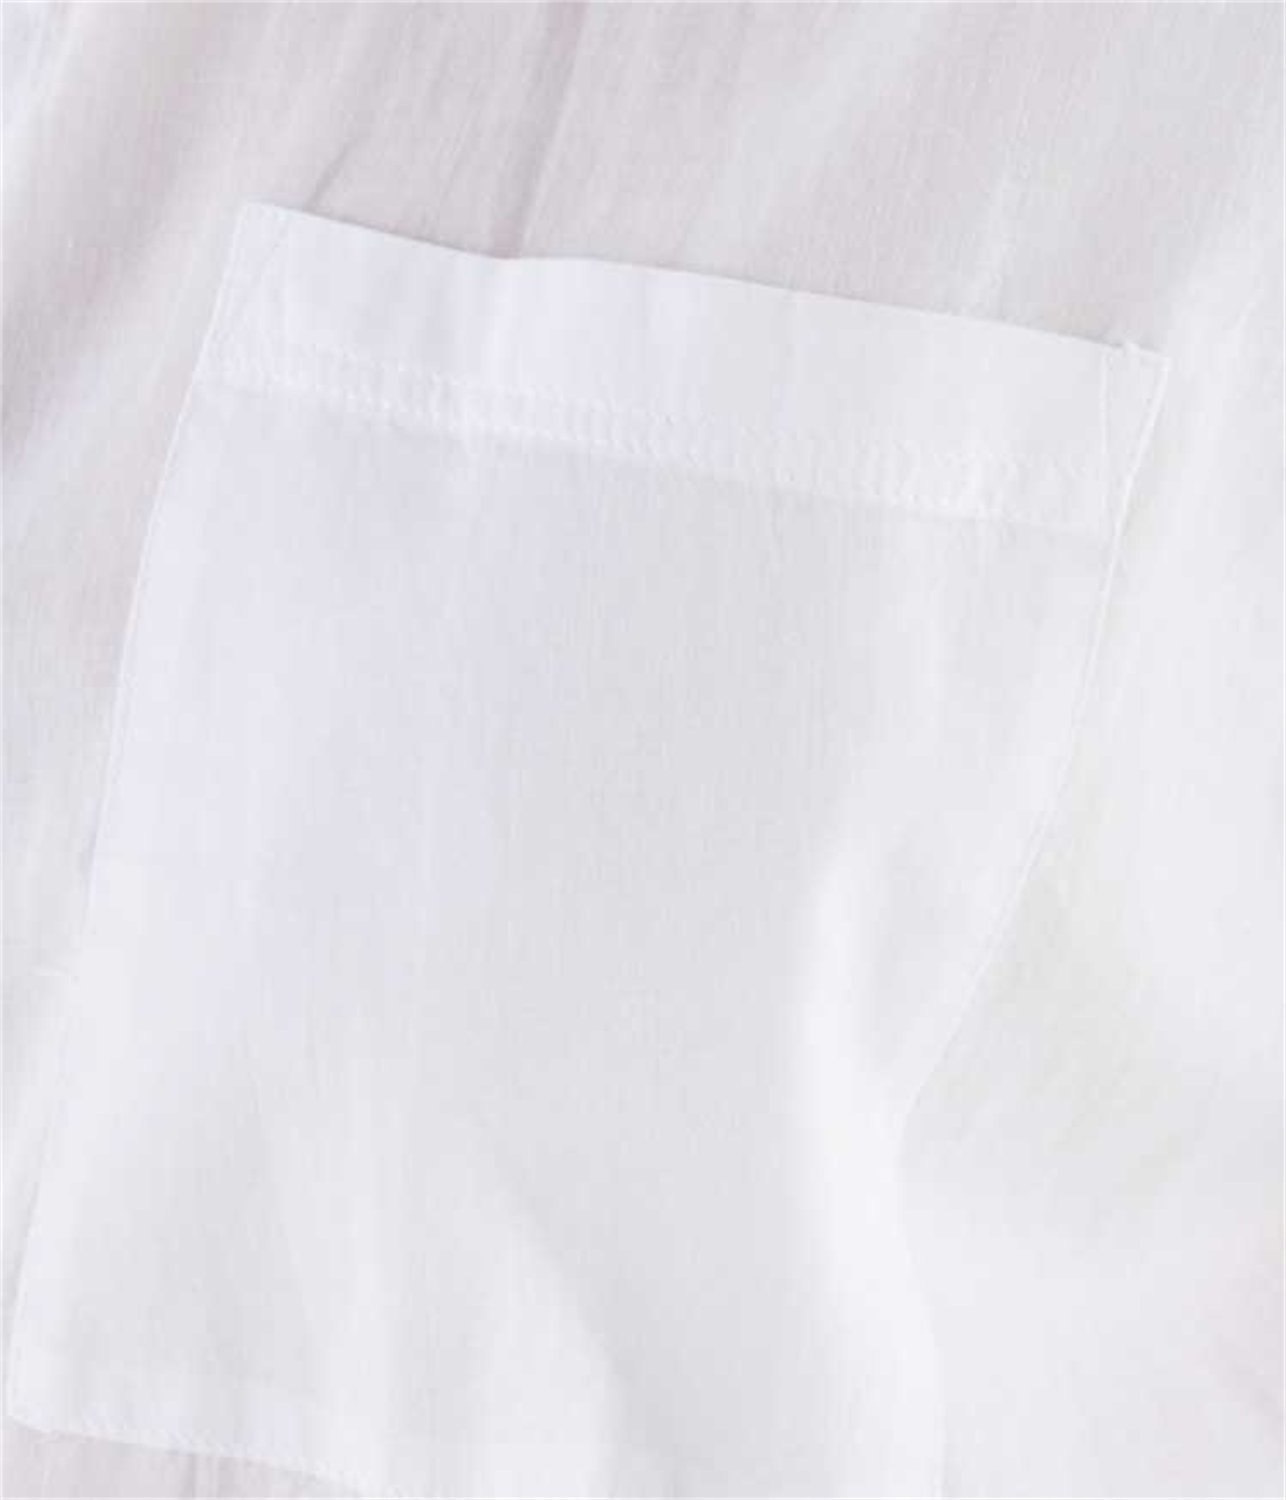 Camaieu oversize női fehér ing 2015.03.04 fotója